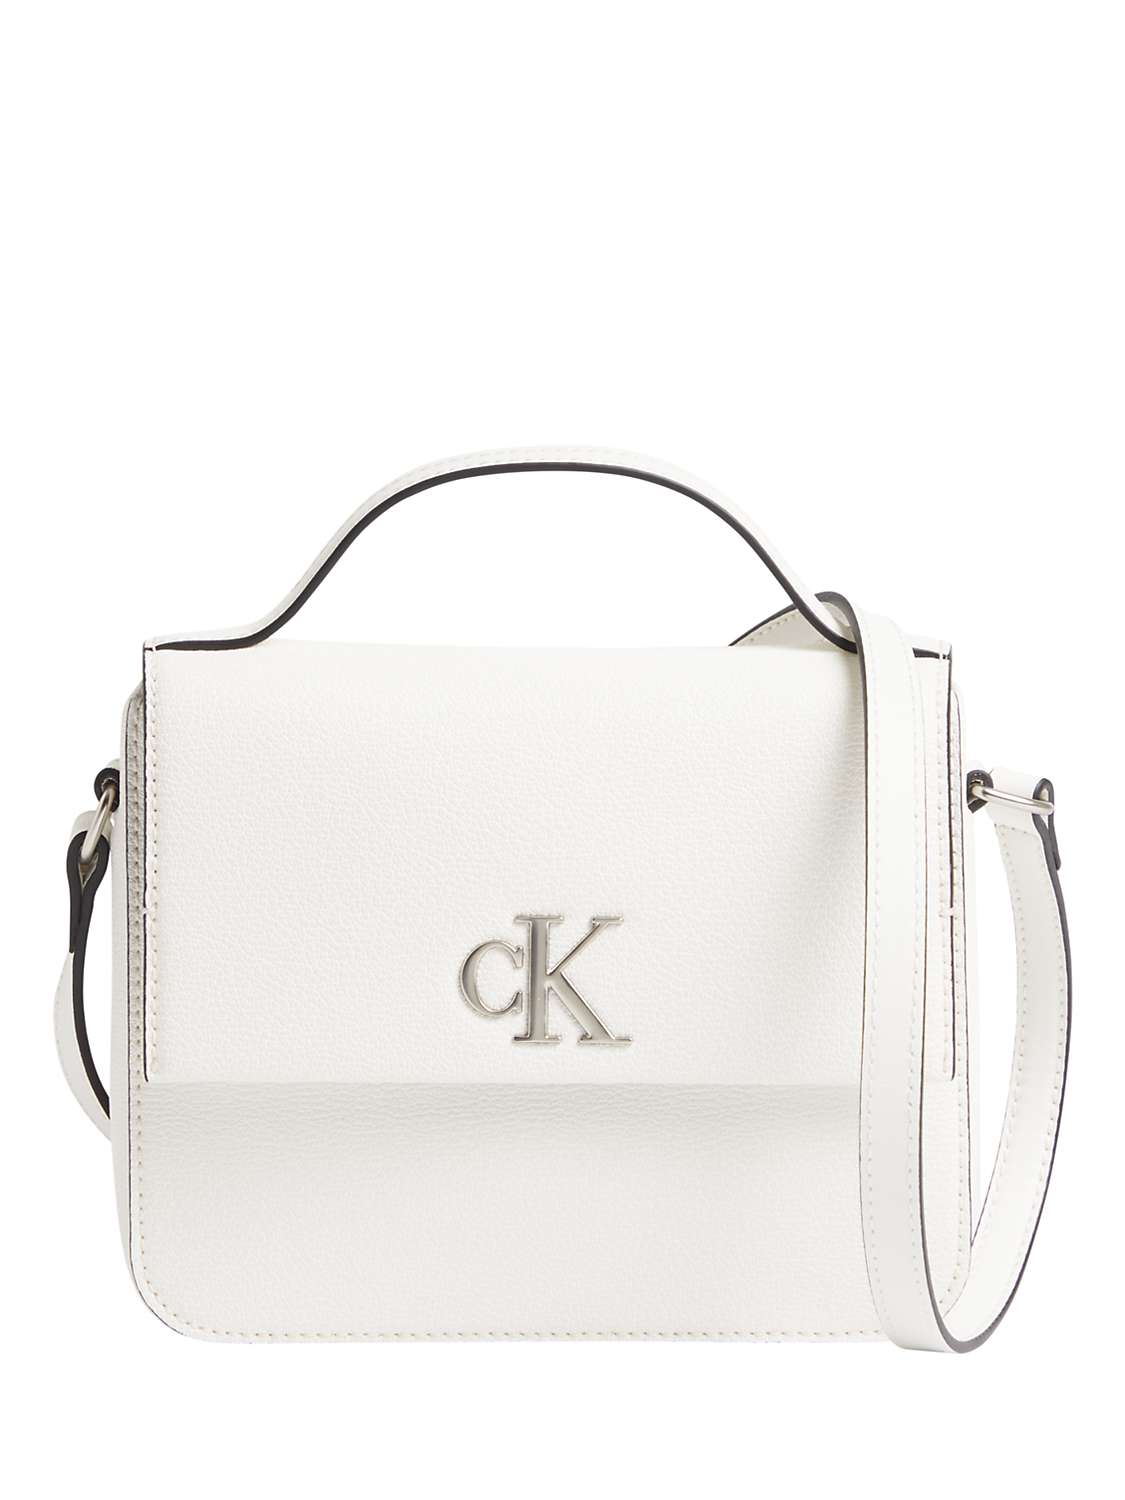 Calvin Klein Monogram Boxy Cross Body Bag, Ivory at John Lewis & Partners